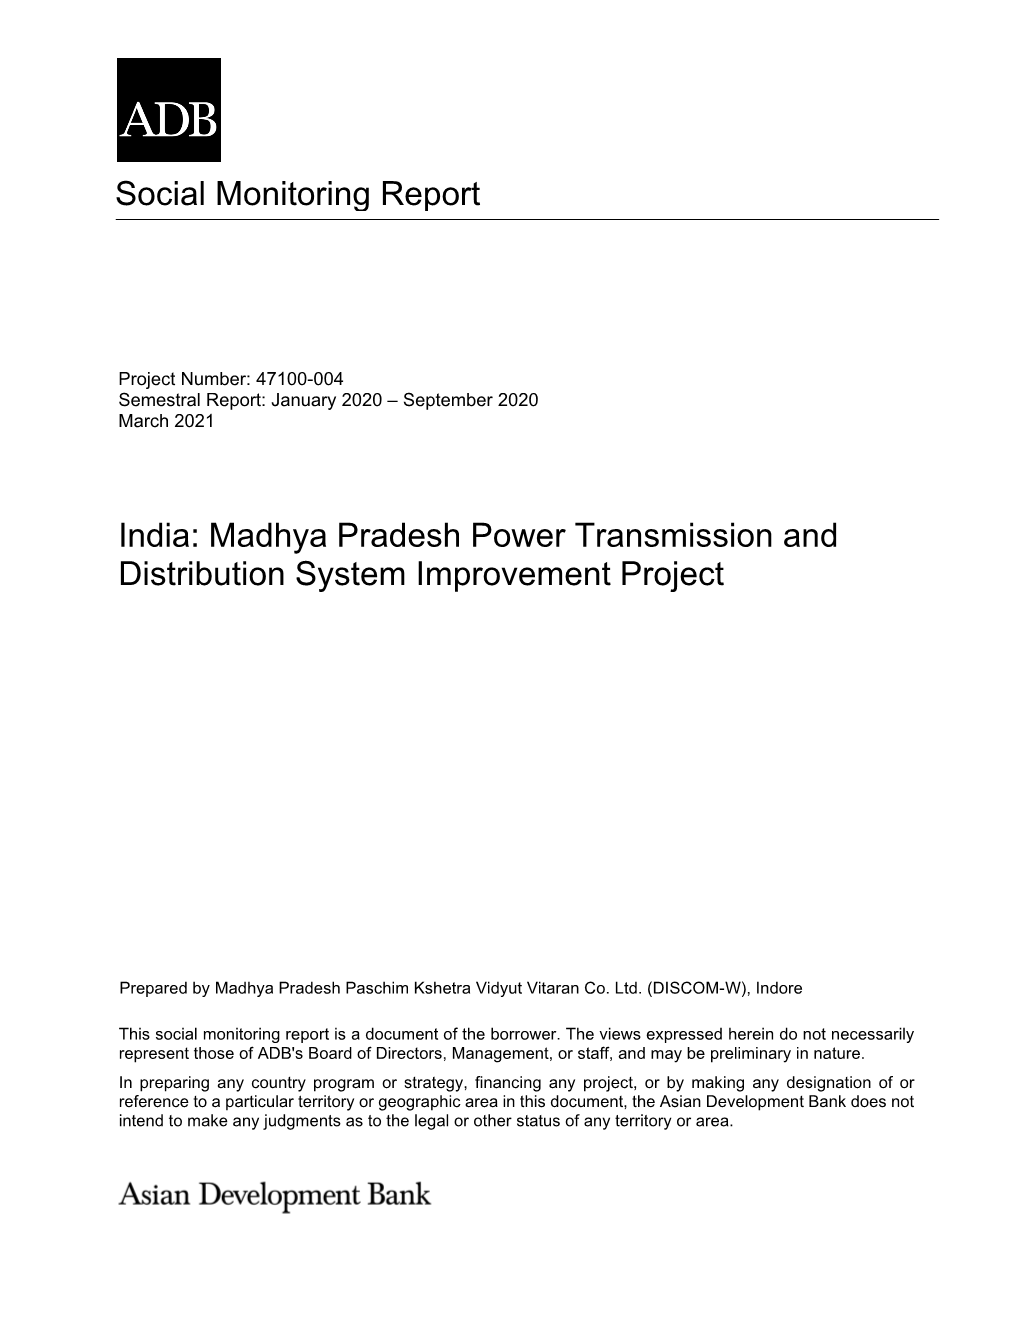 47100-004: Madhya Pradesh Power Transmission and Distribution